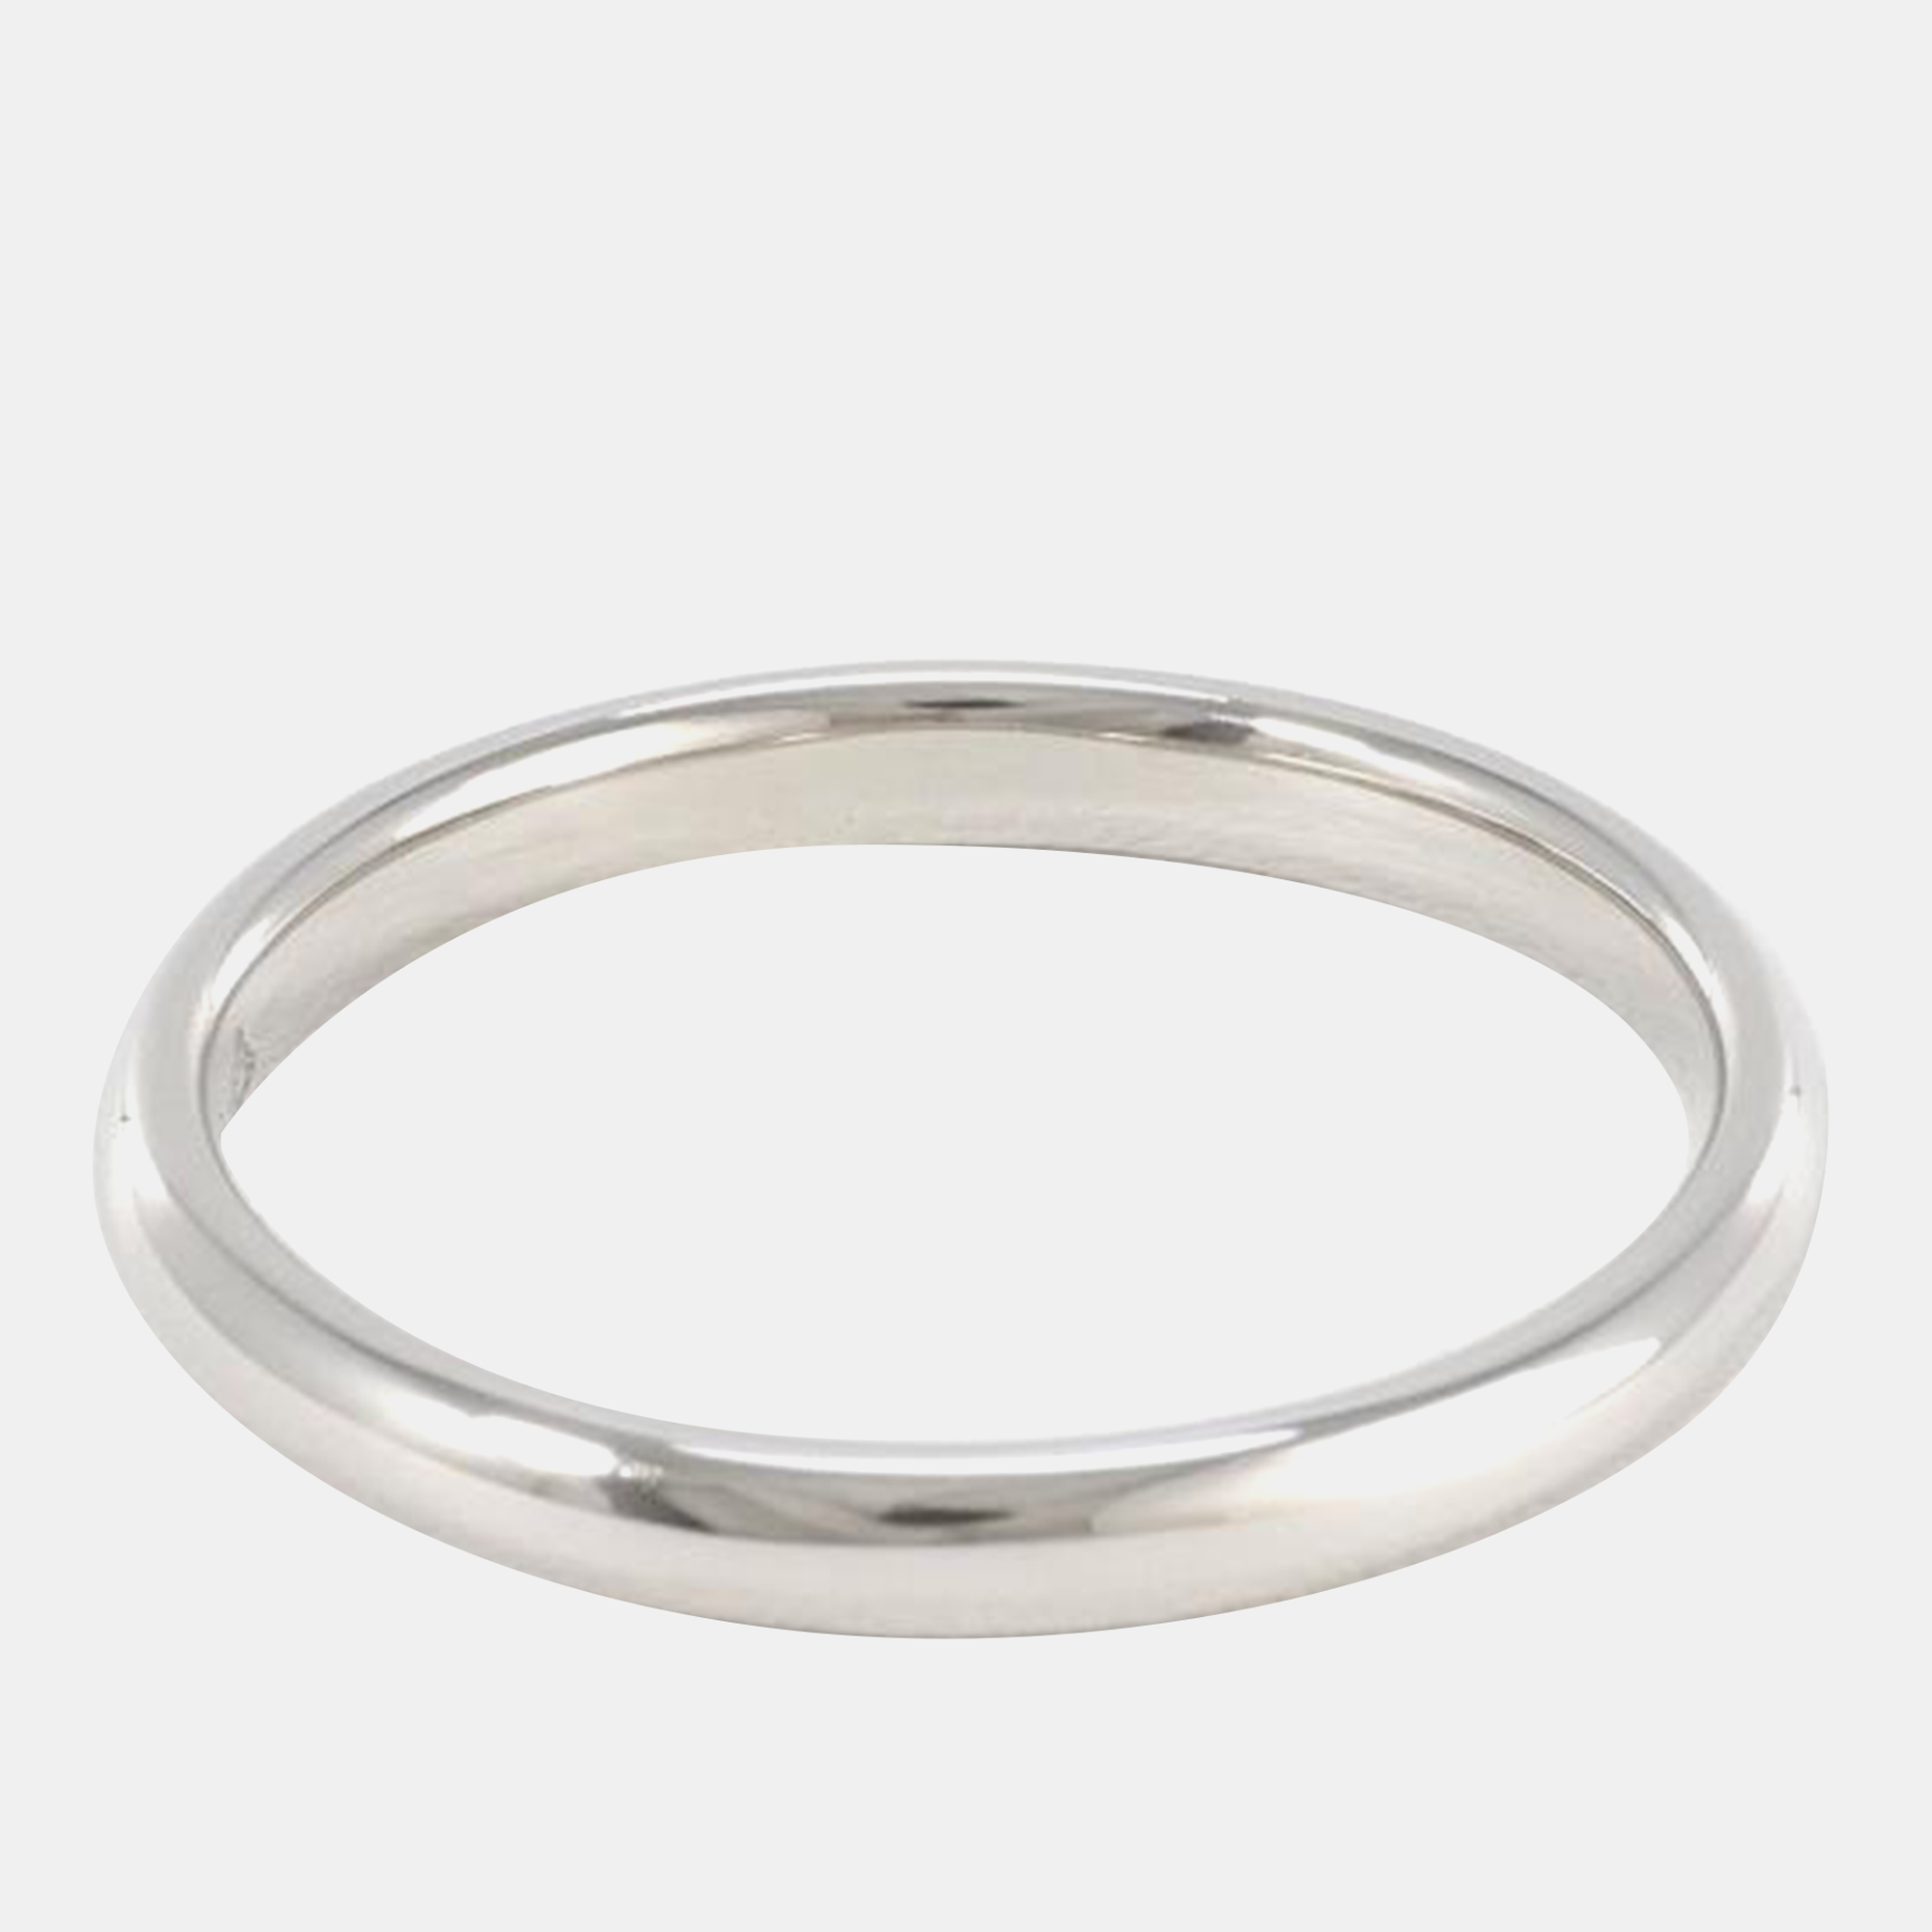 Chanel silver metal platinum marriage ring eu 54.5